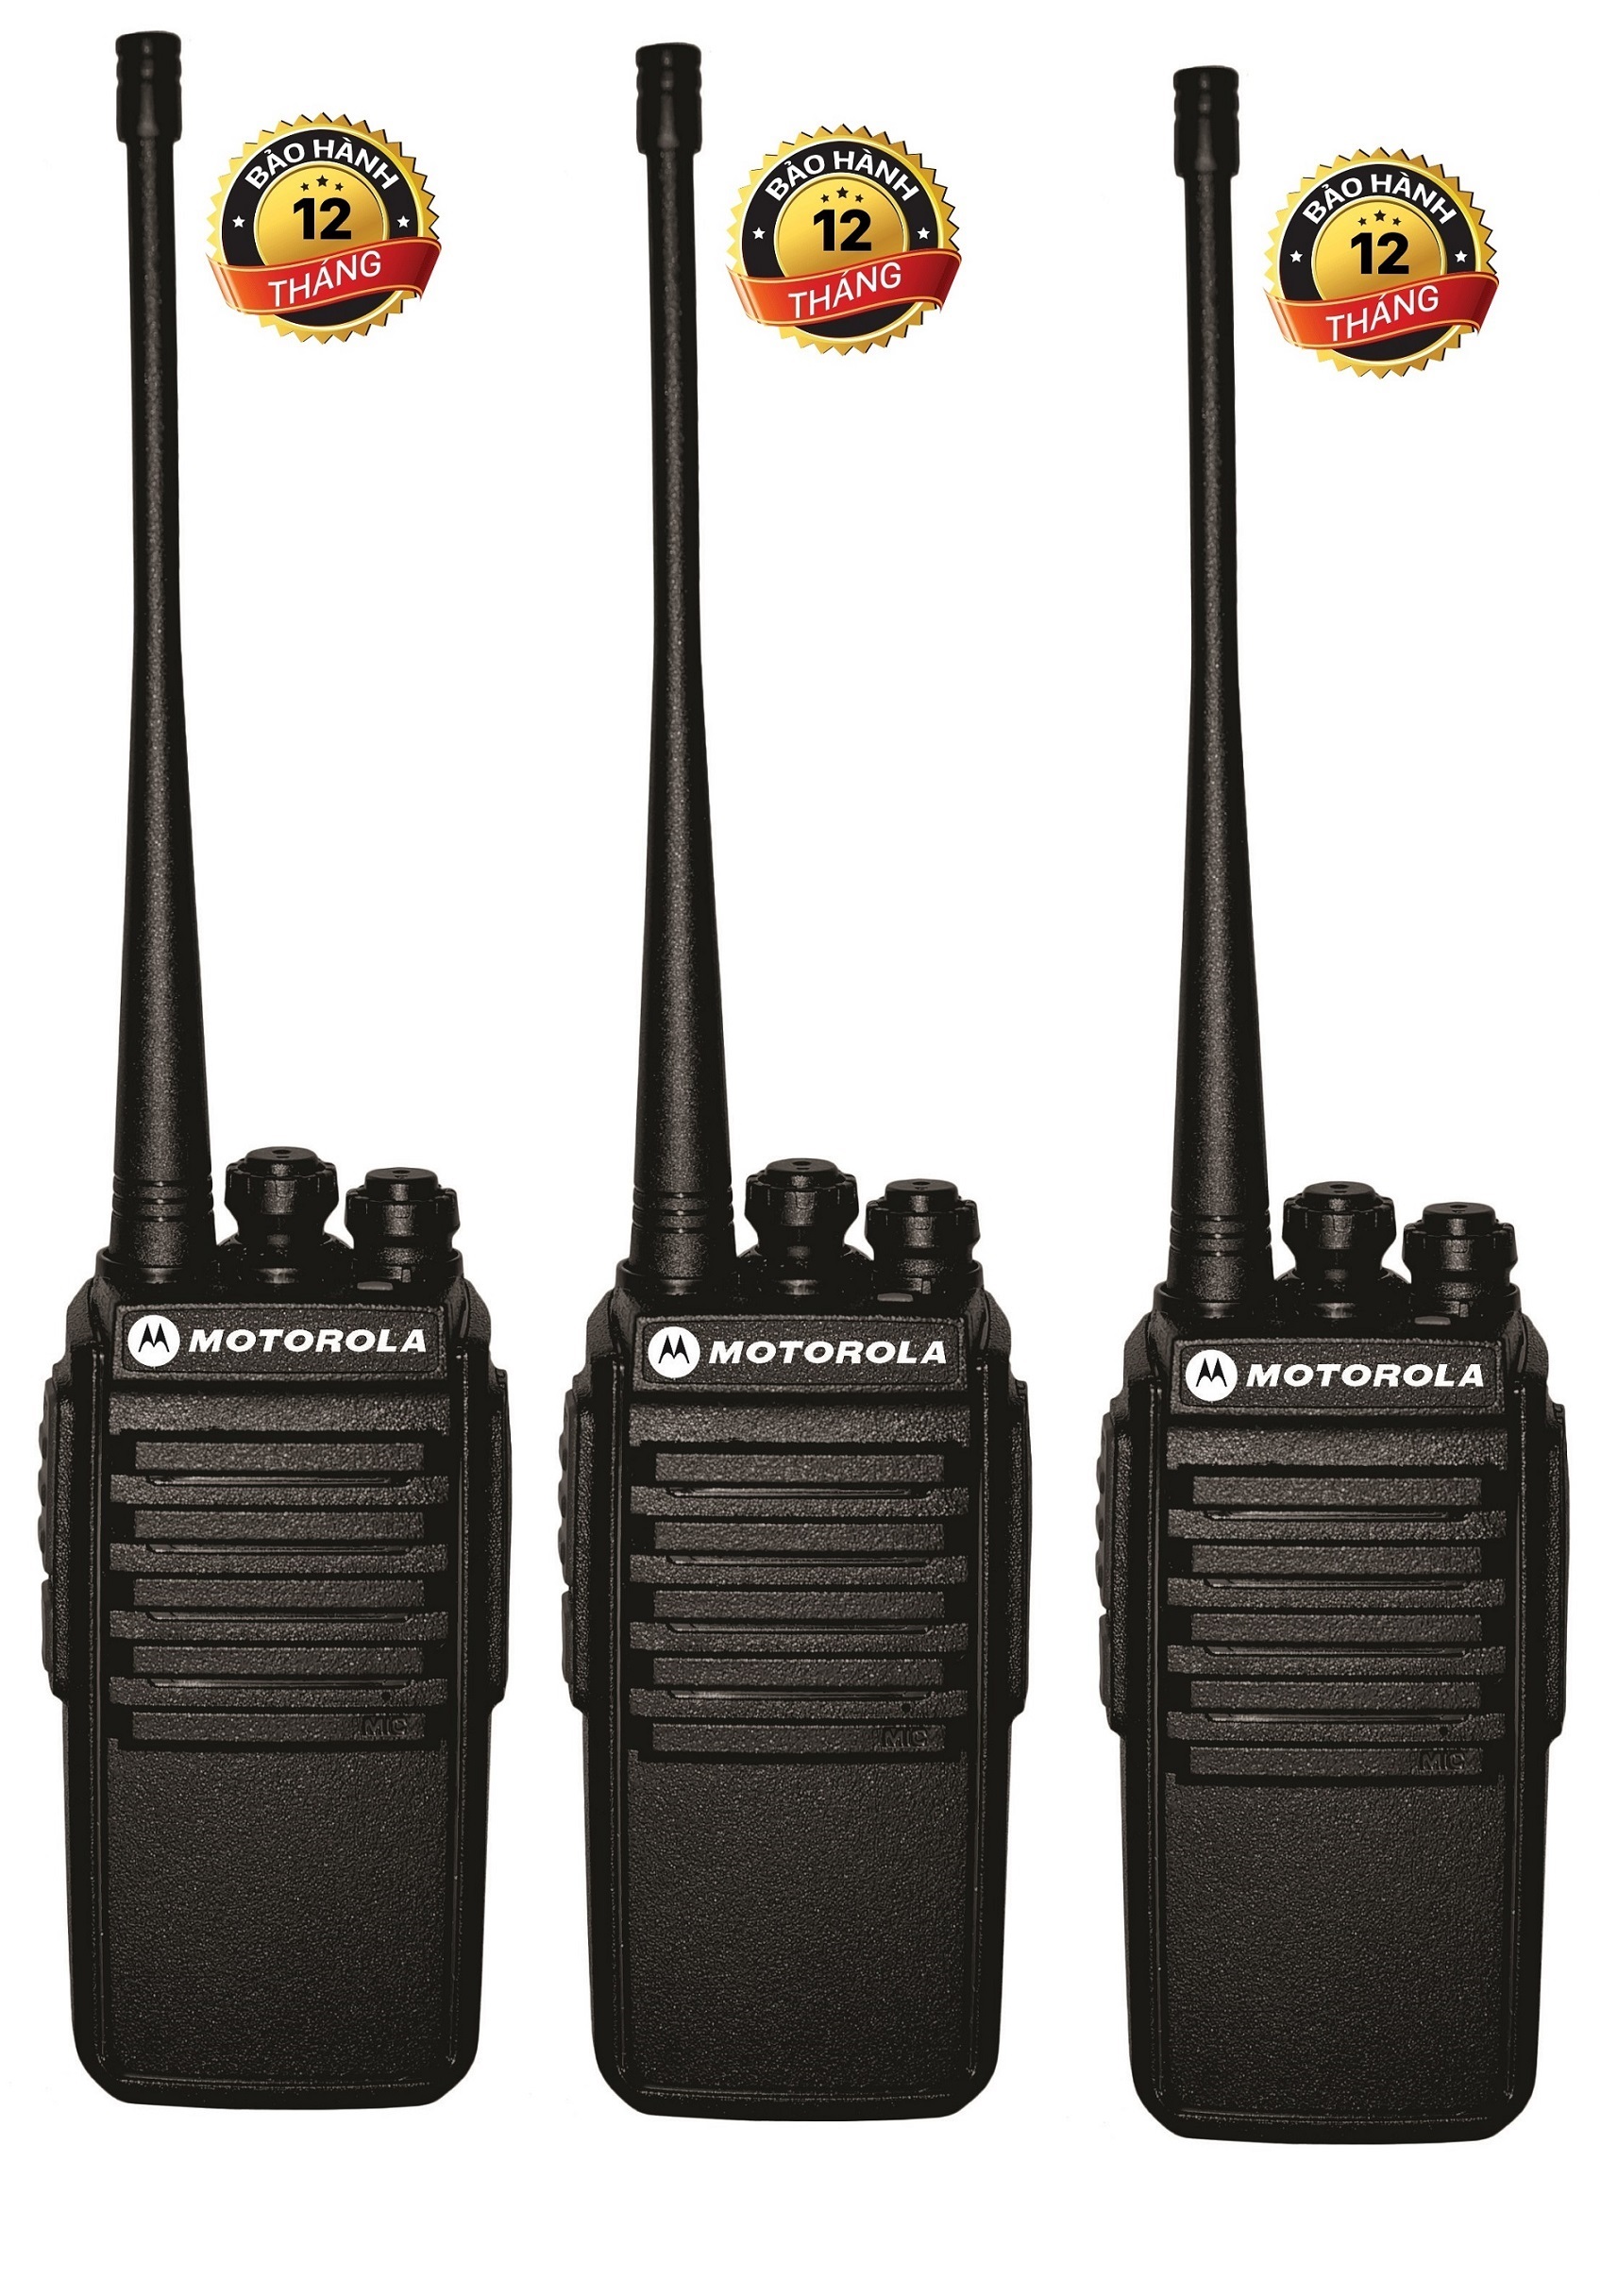 Bộ 2 Bộ đàm Motorola GP650 (Bộ đàm giá rẻ)